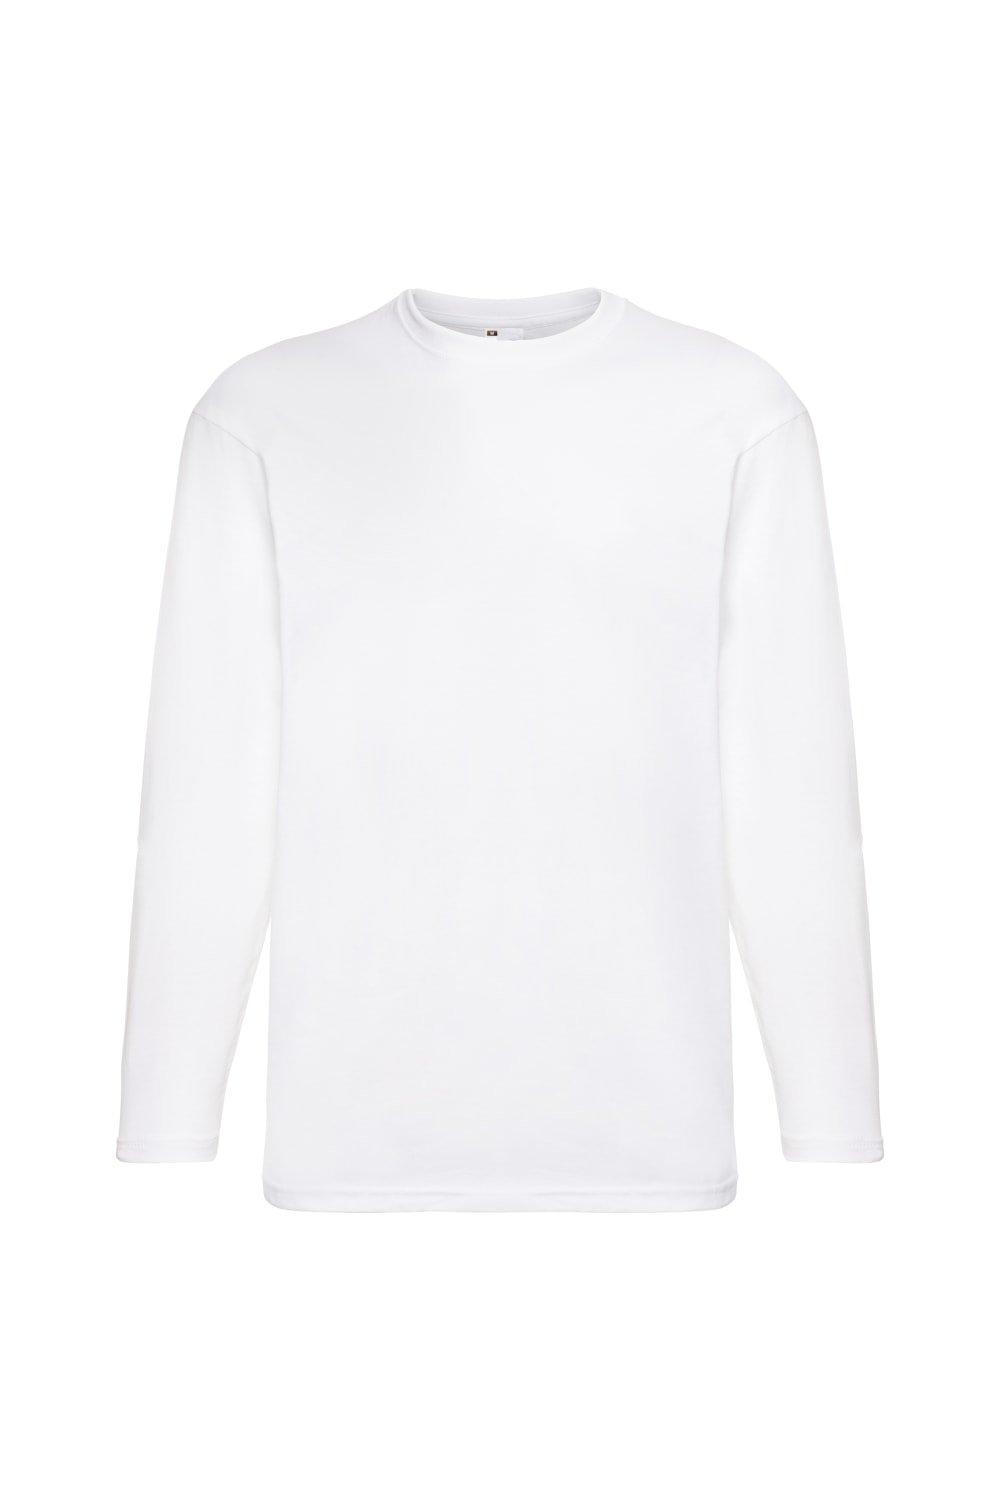 Повседневная футболка Value с длинным рукавом Universal Textiles, белый мужская футболка лиса русская краса xl серый меланж